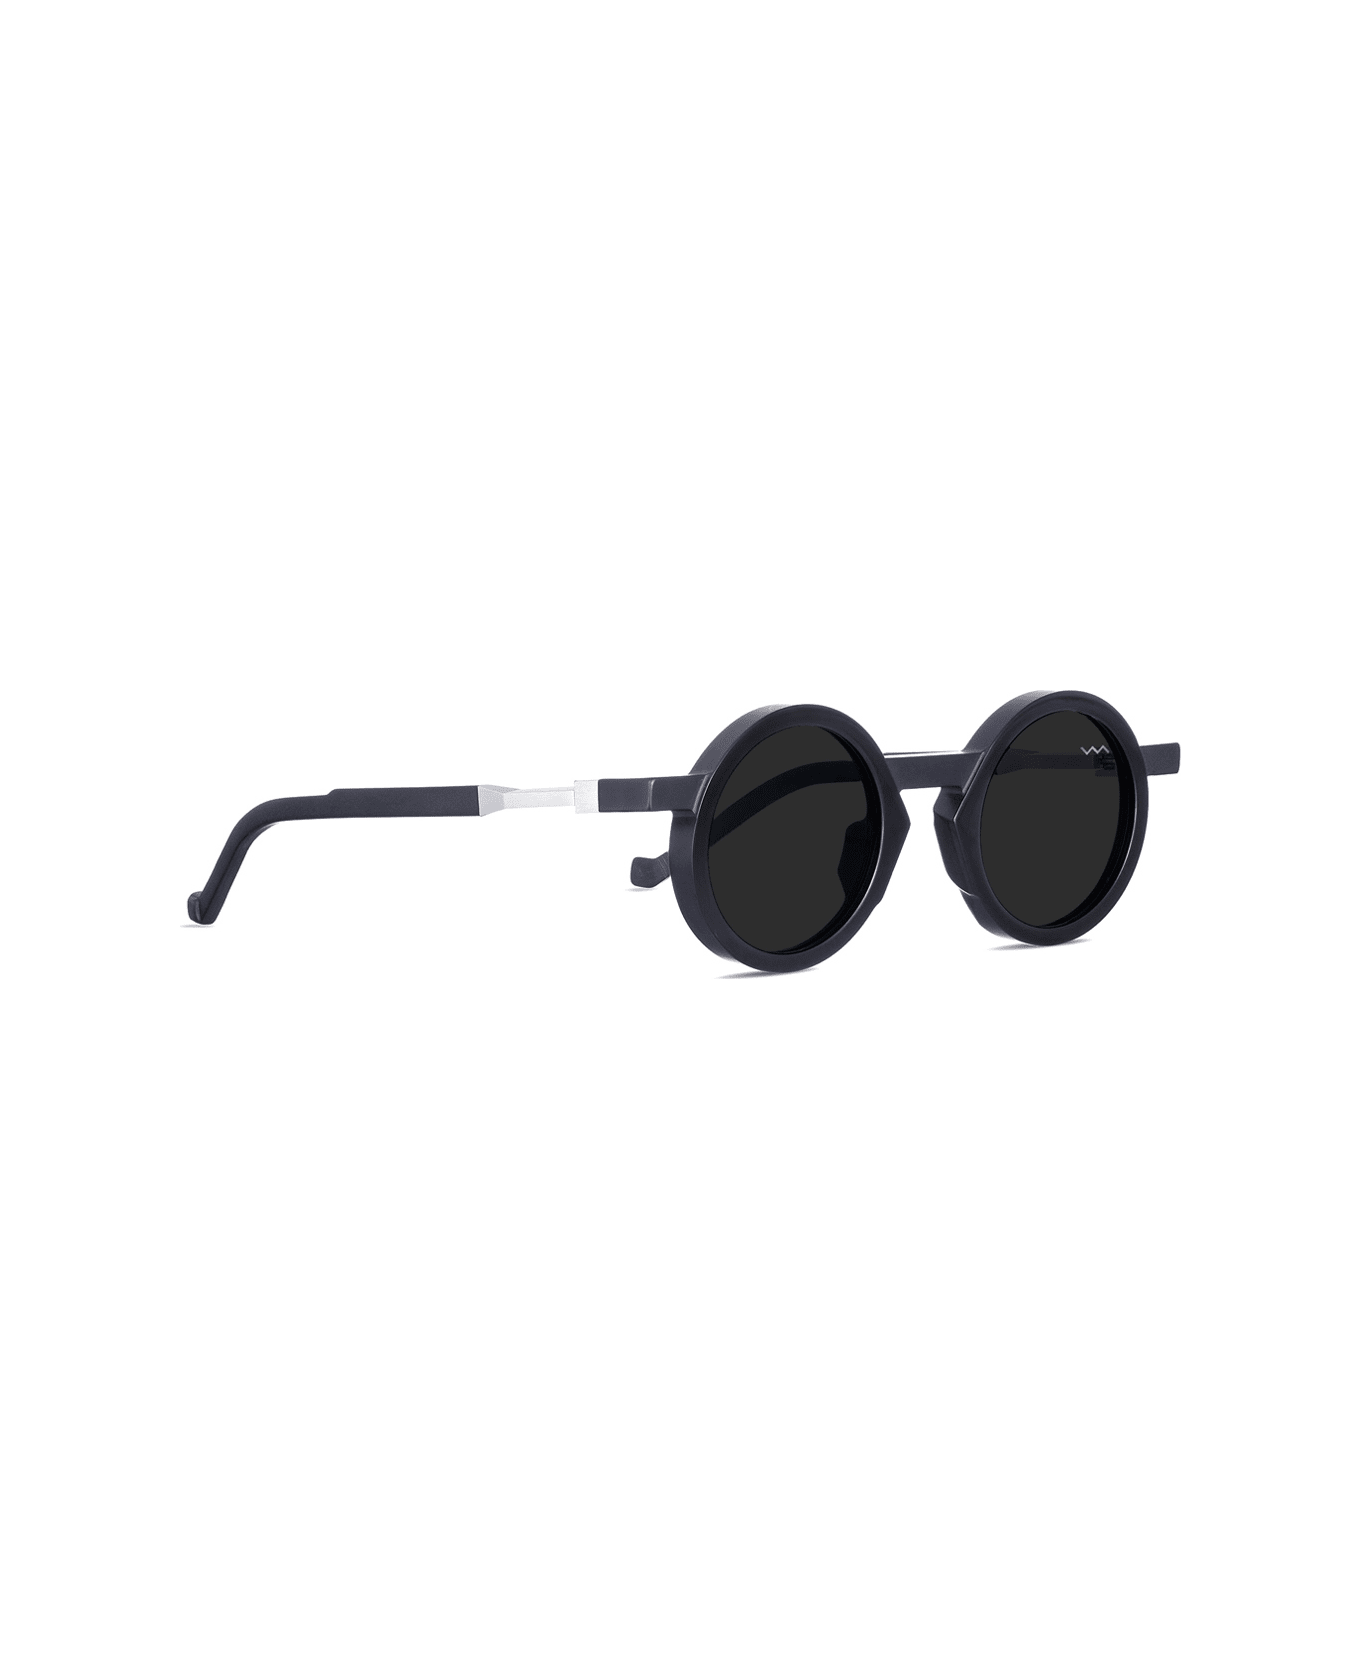 VAVA Wl0040 Black Sunglasses - Nero サングラス